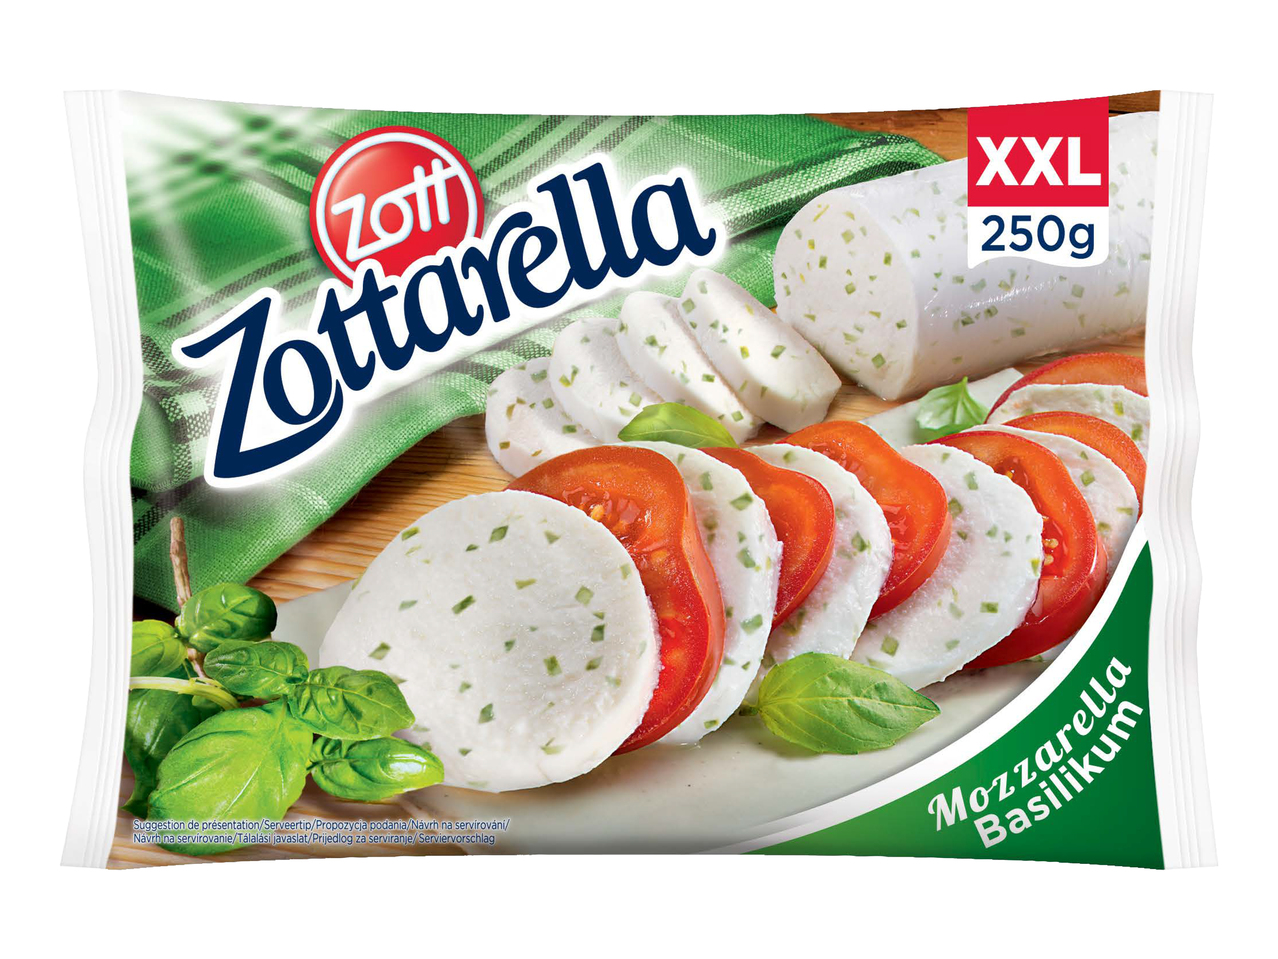 Zott Zottarella XXL